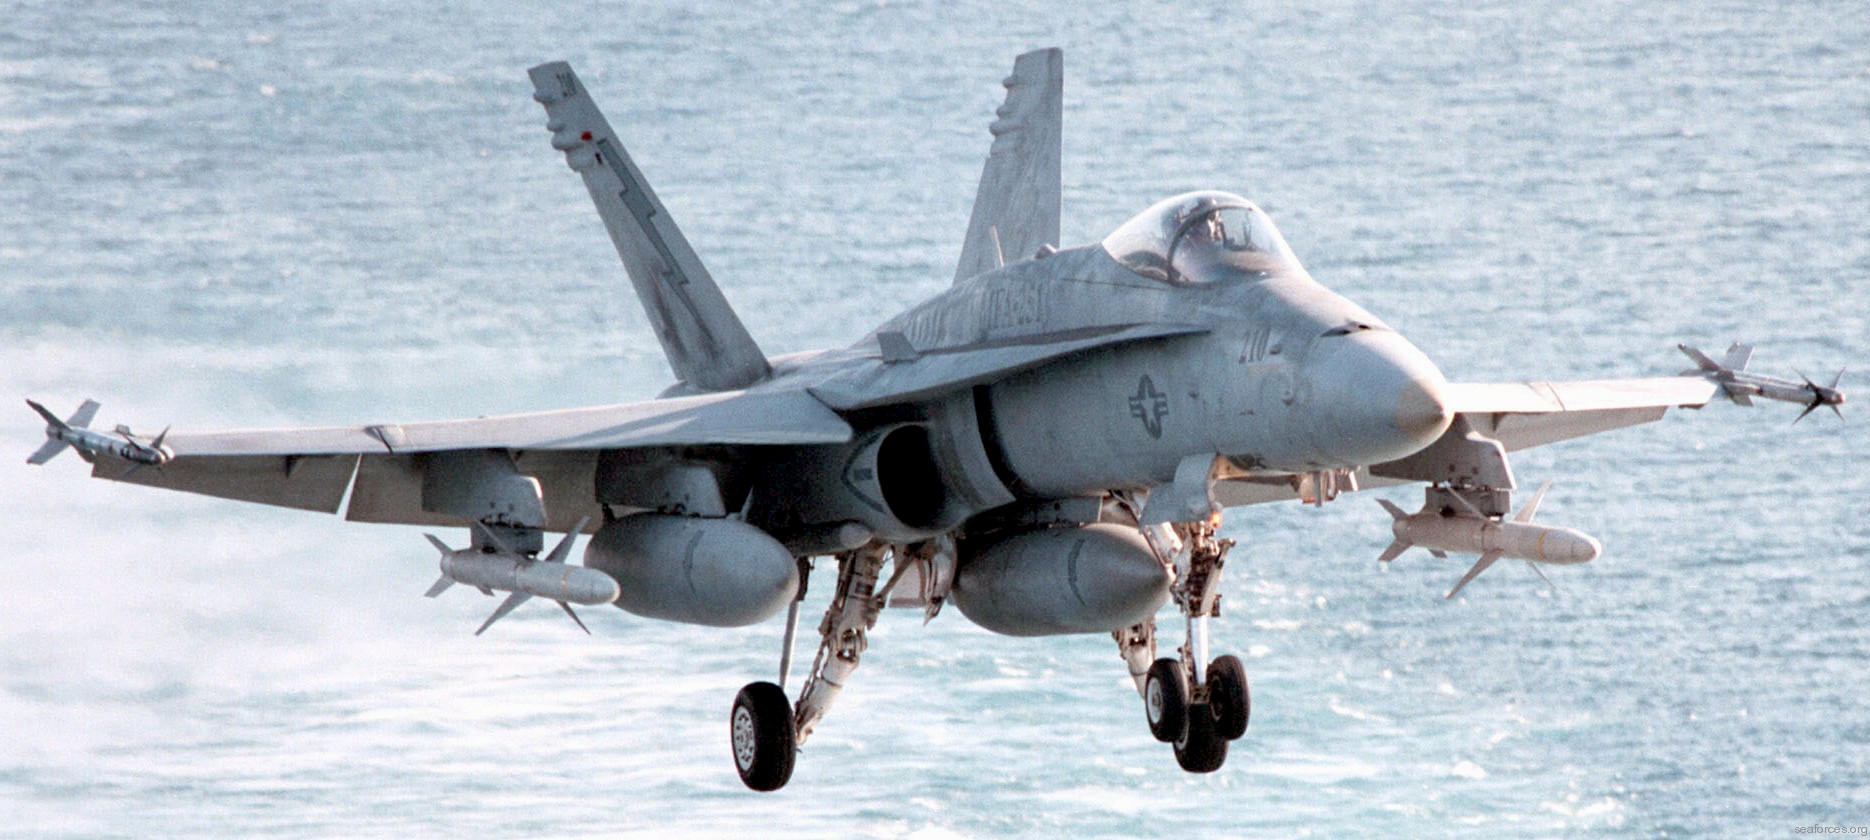 vmfa-251 thunderbolts marine fighter attack squadron f/a-18c hornet uss george washington cvn-73 51